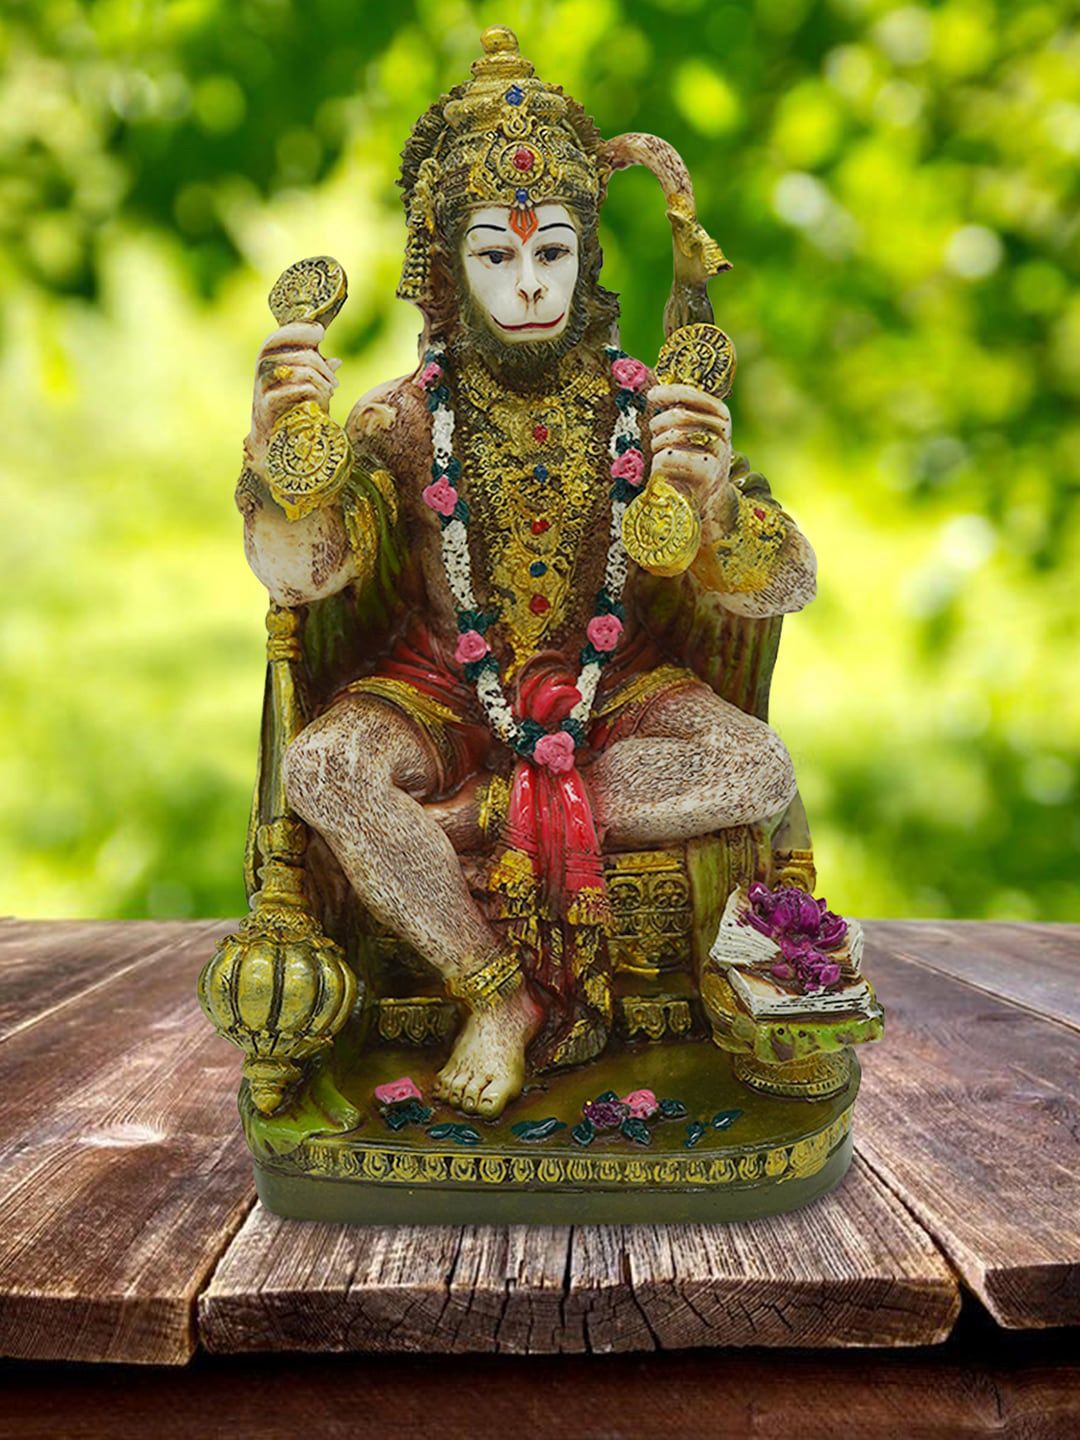 Gallery99 Green & Brown Lord Hanuman Idol Showpiece Price in India